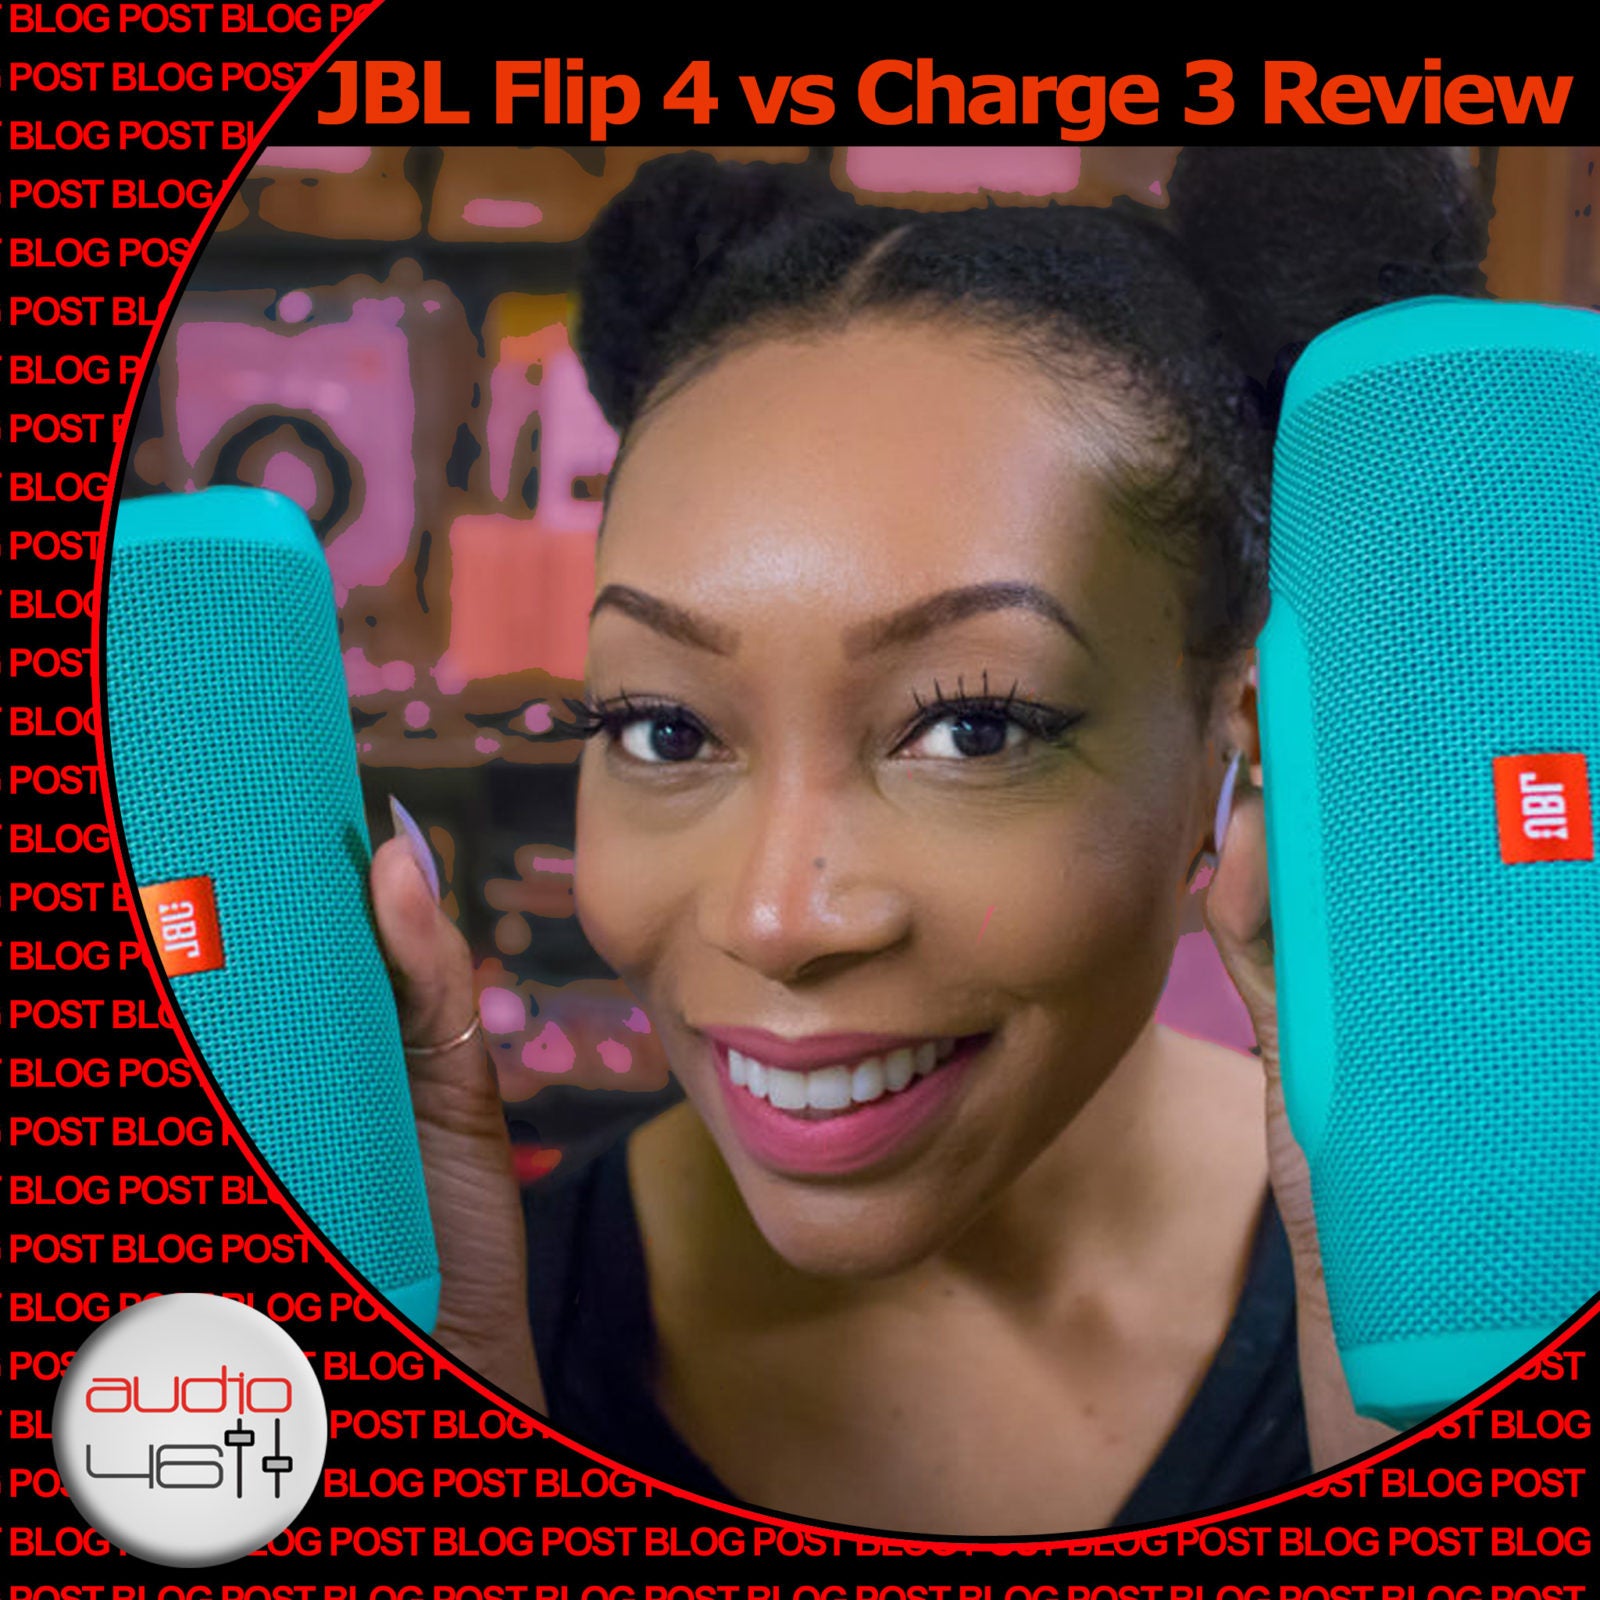 JBL Flip 4 vs Charge 3 Review